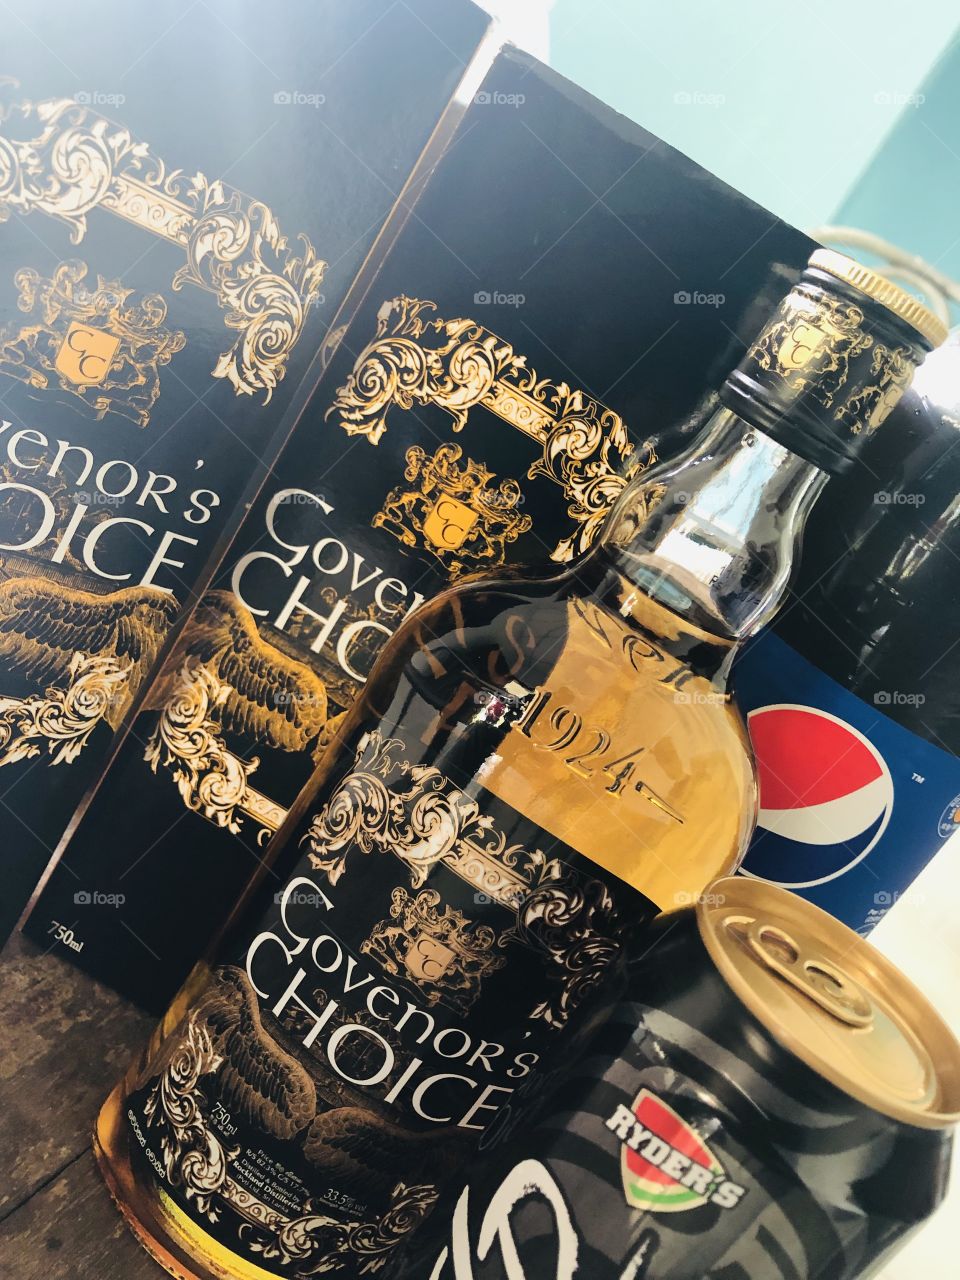 Covenor’s choice liquor 